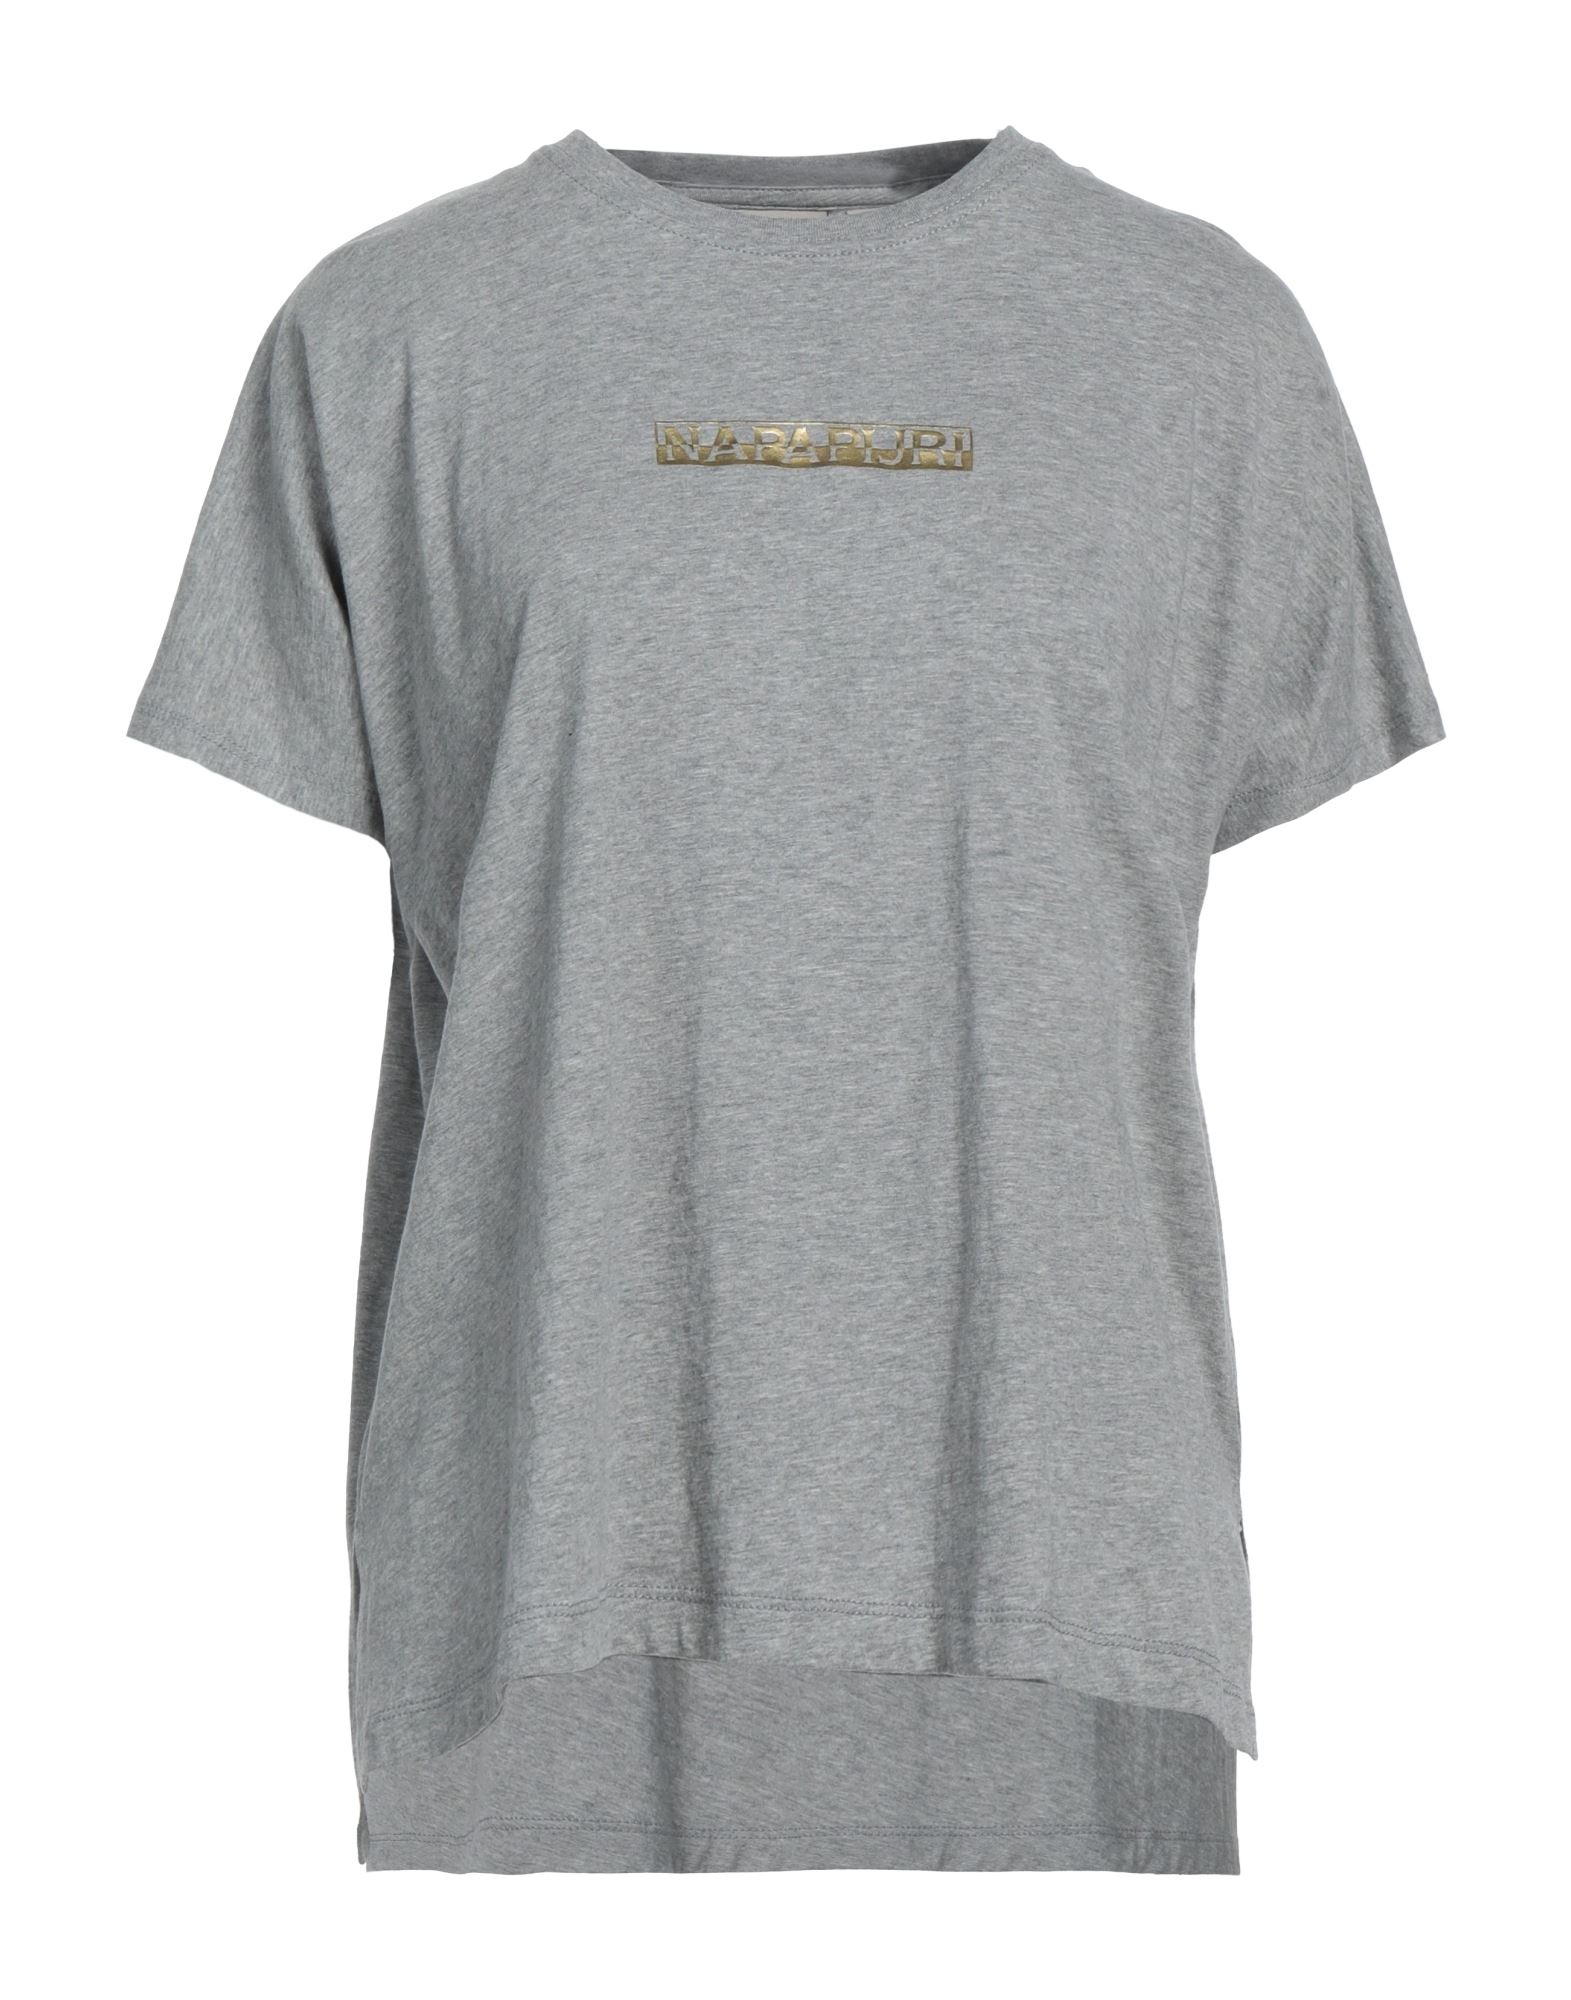 Napapijri T-shirts In Grey